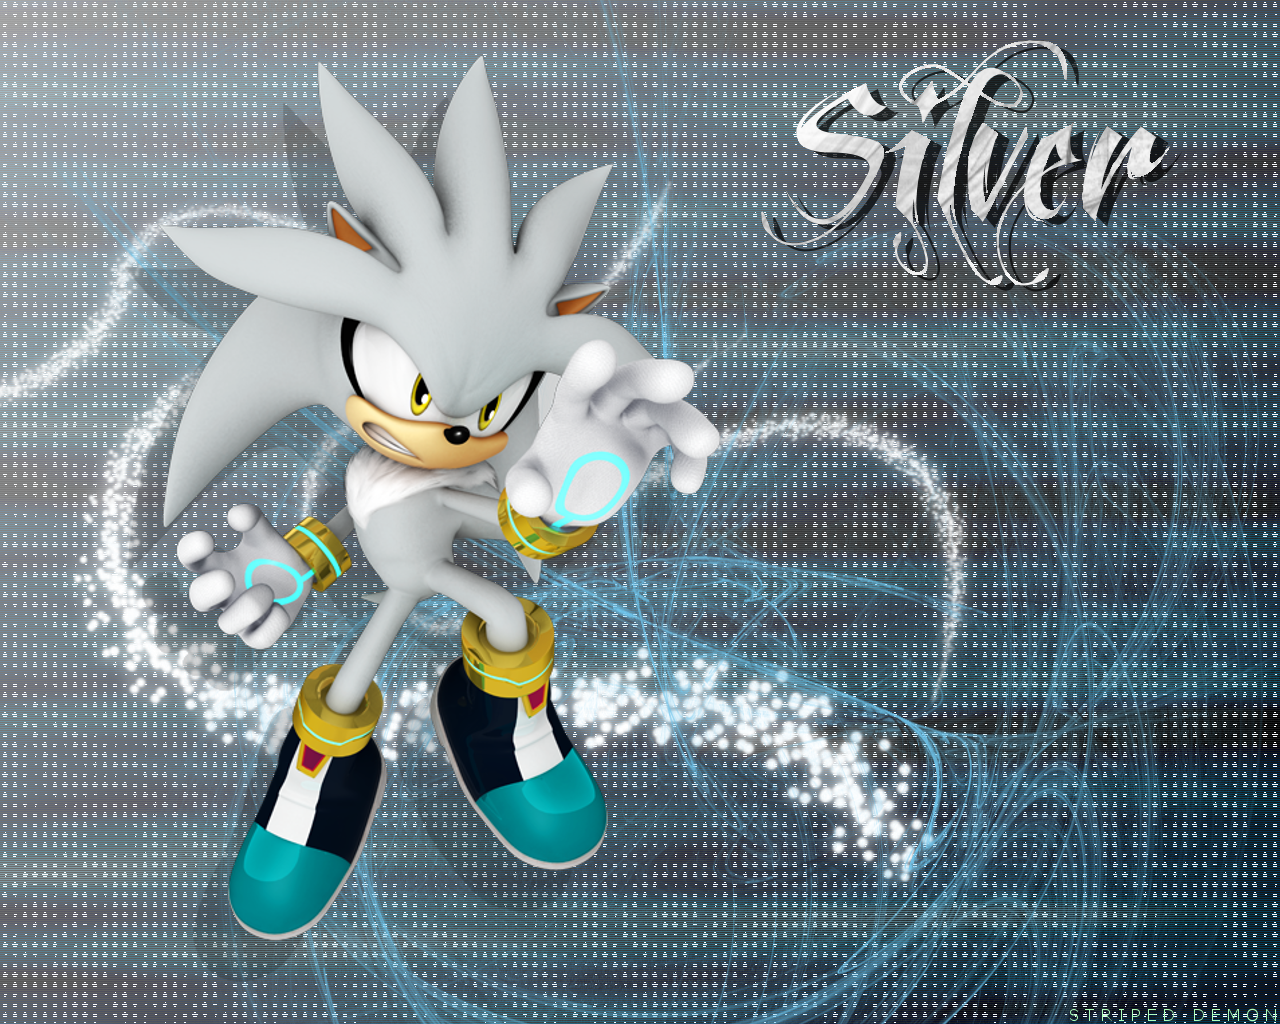 Silver the Hedgehog Wallpaper by StripedDemon on